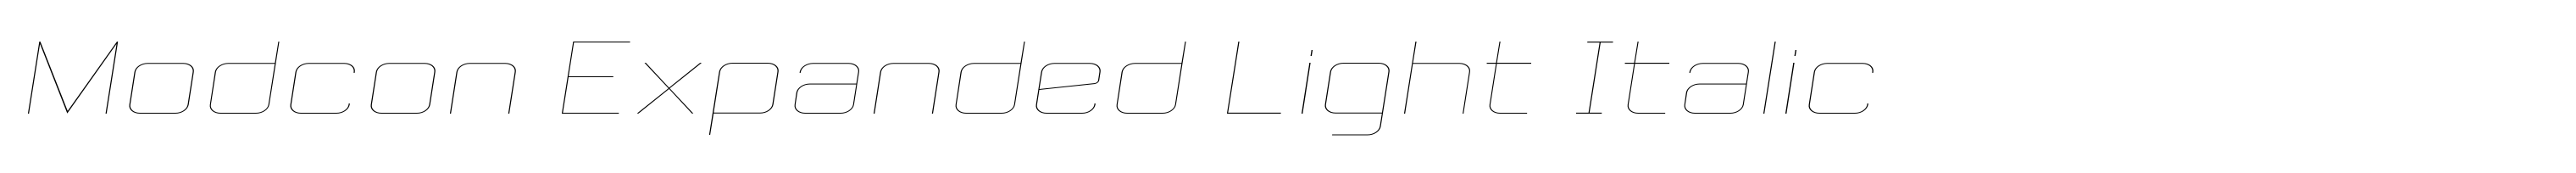 Modcon Expanded Light Italic